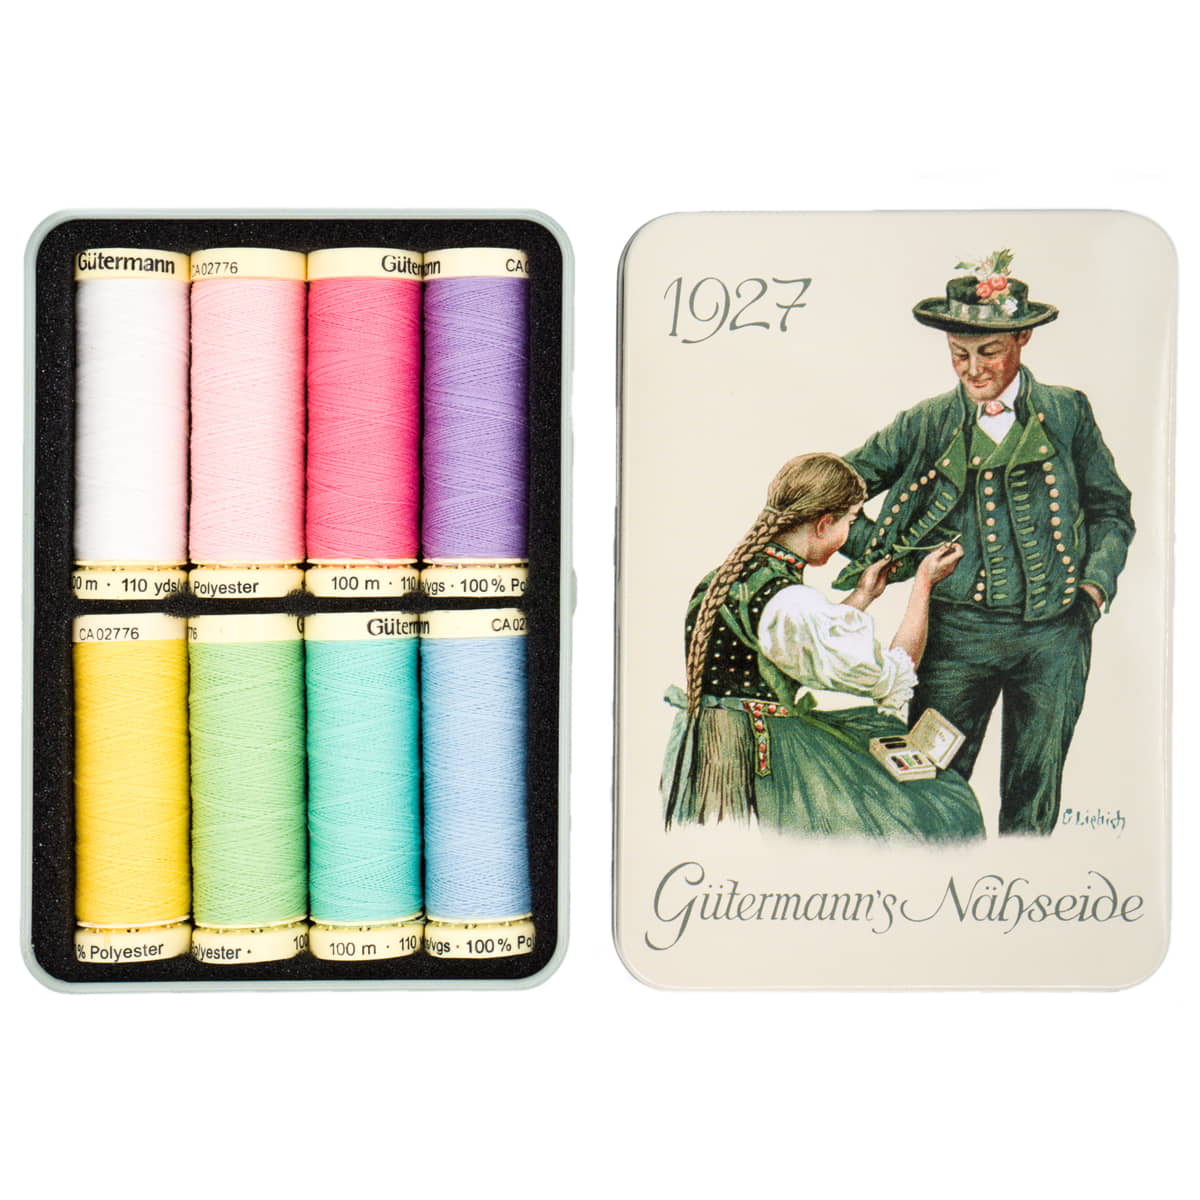 Gütermann Nostalgie Box pastel kleuren - 1927 naaigaren GM-NOSTALGIA-1927-640951 4029394681820 - Fourniturenkraam.nl